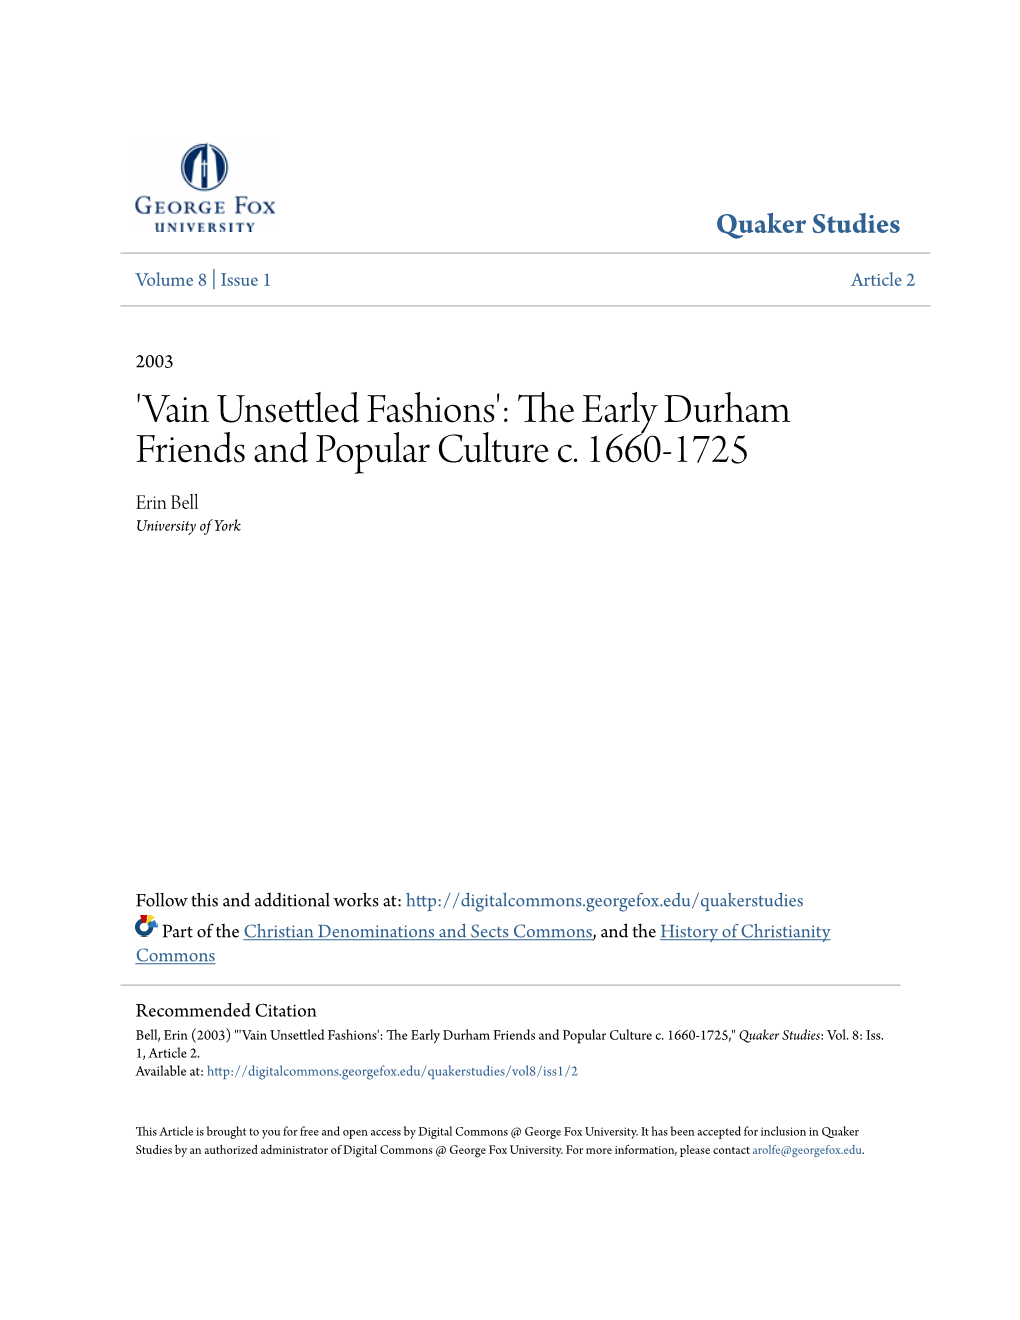 The Early Durham Friends and Popular Culture C. 1660-1725," Quaker Studies: Vol